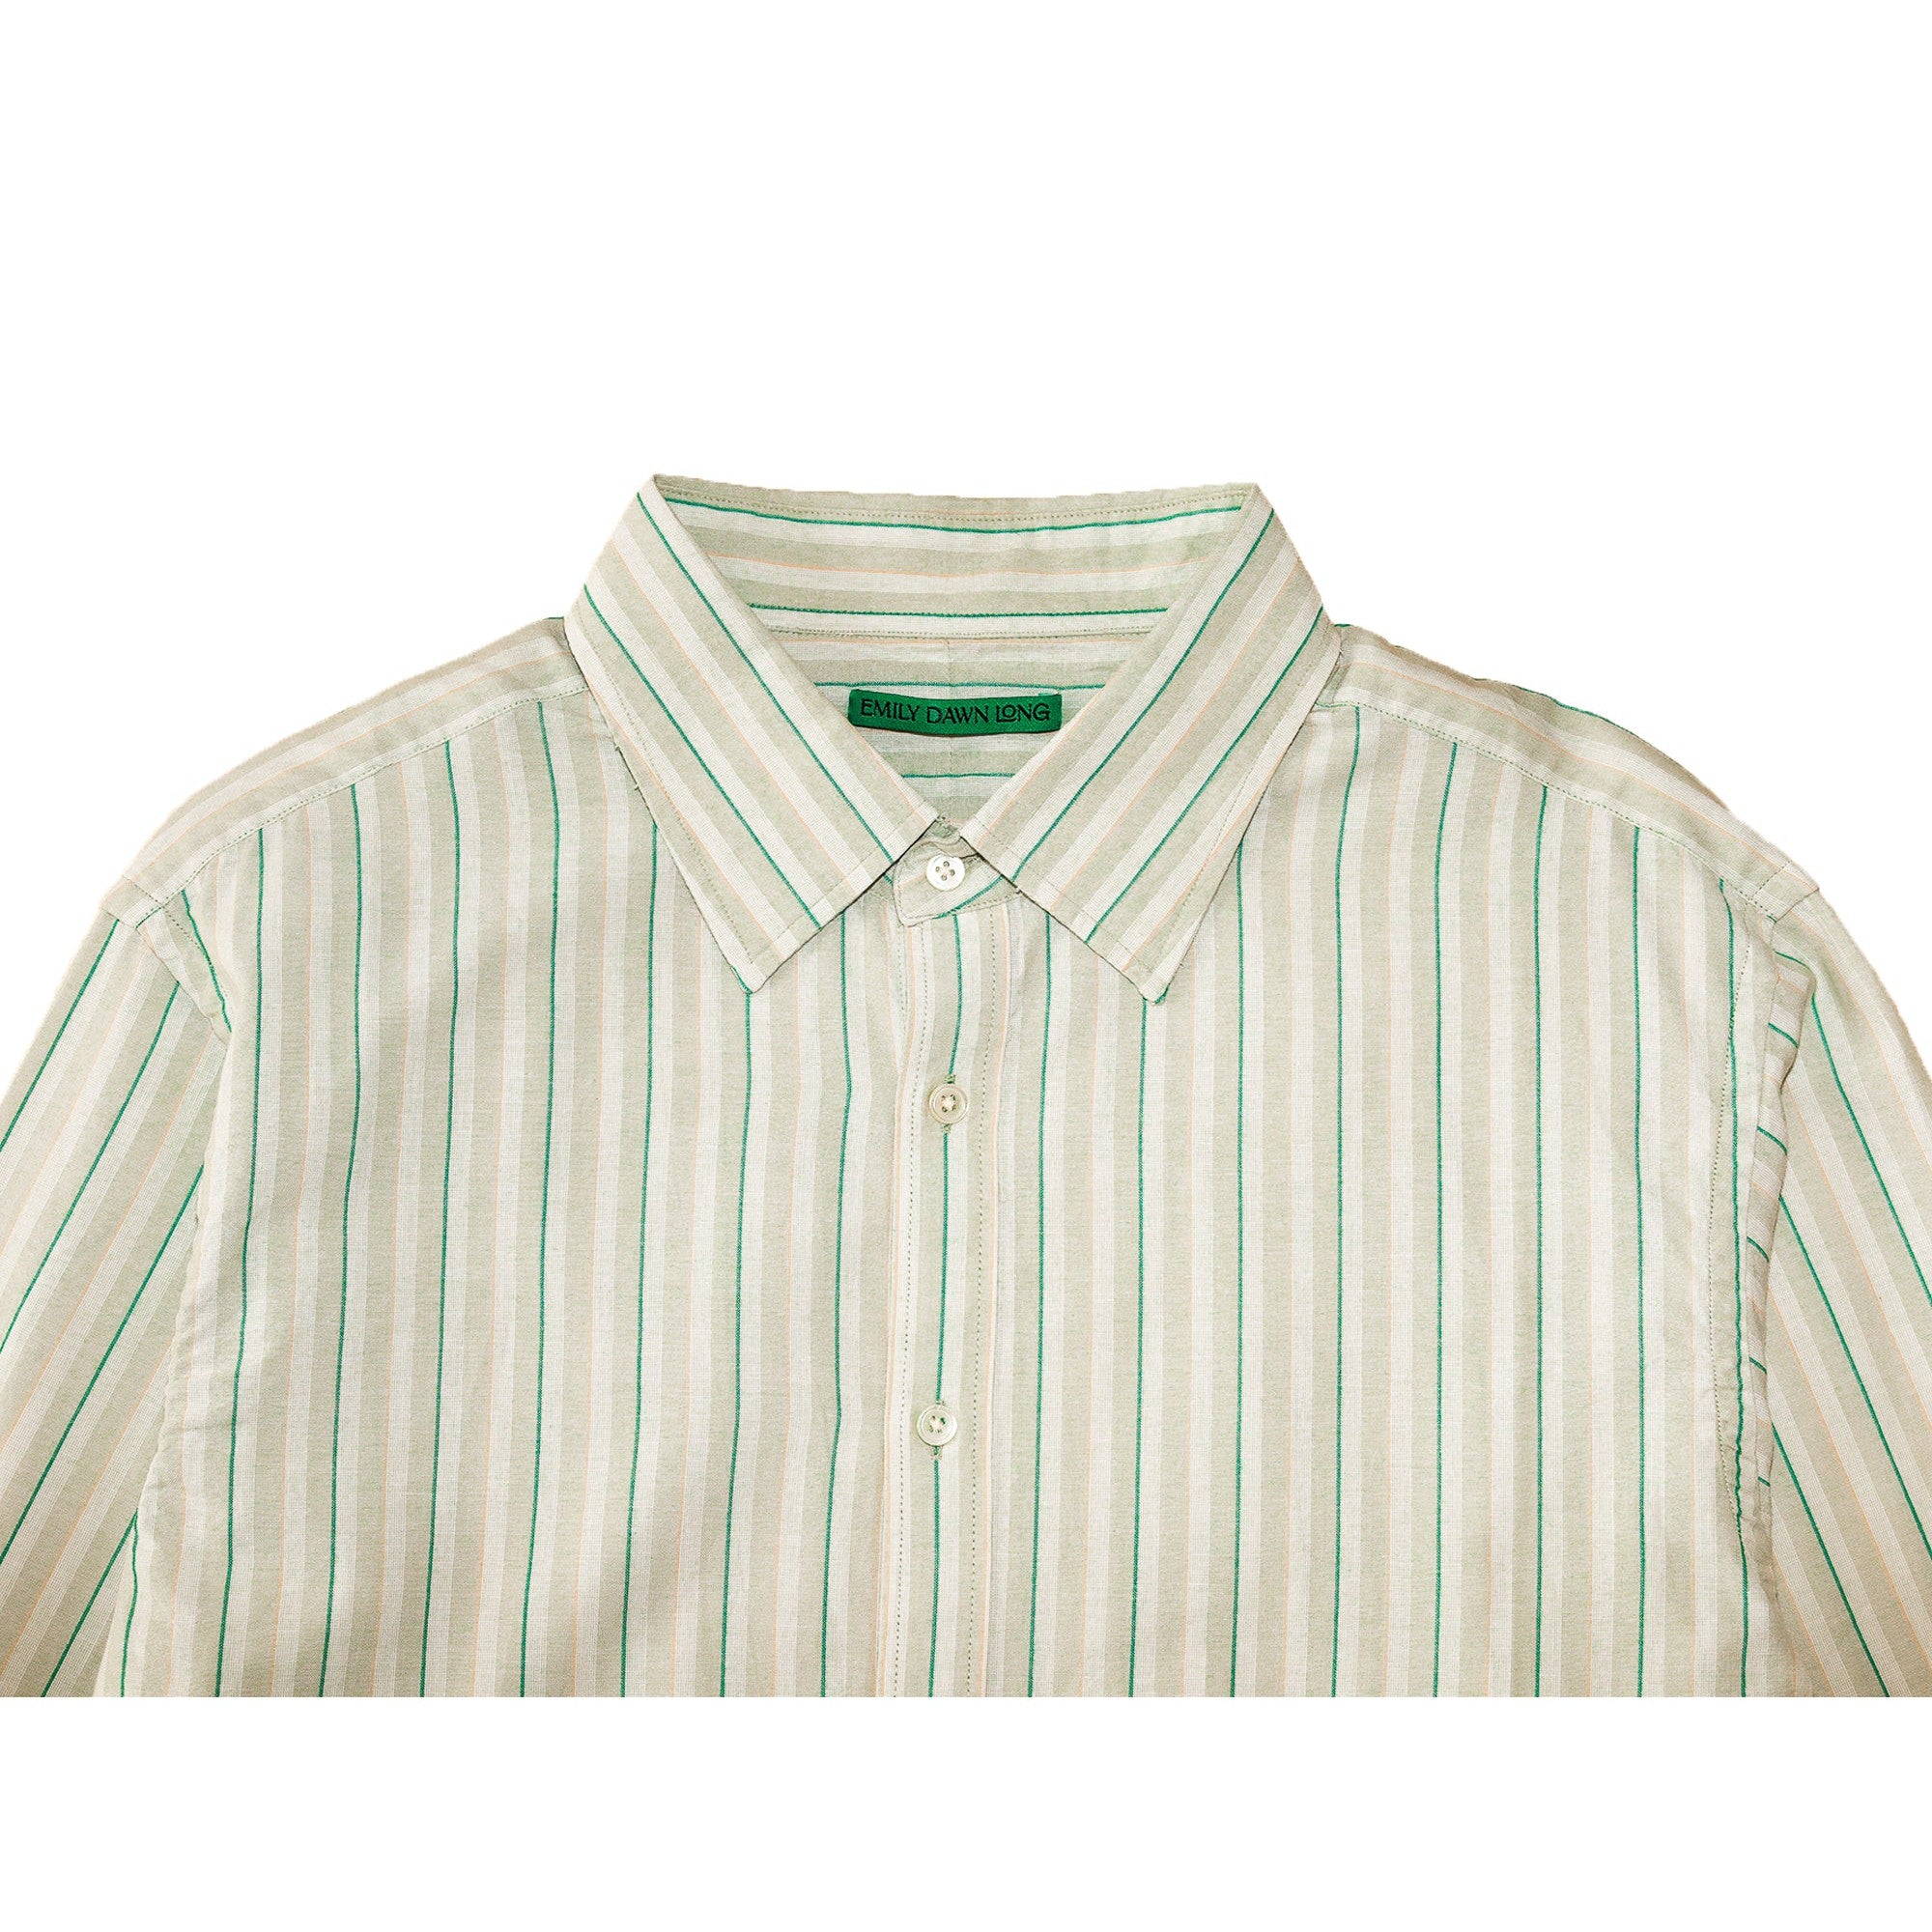 Jeff's Shirt - Arizona Stripe